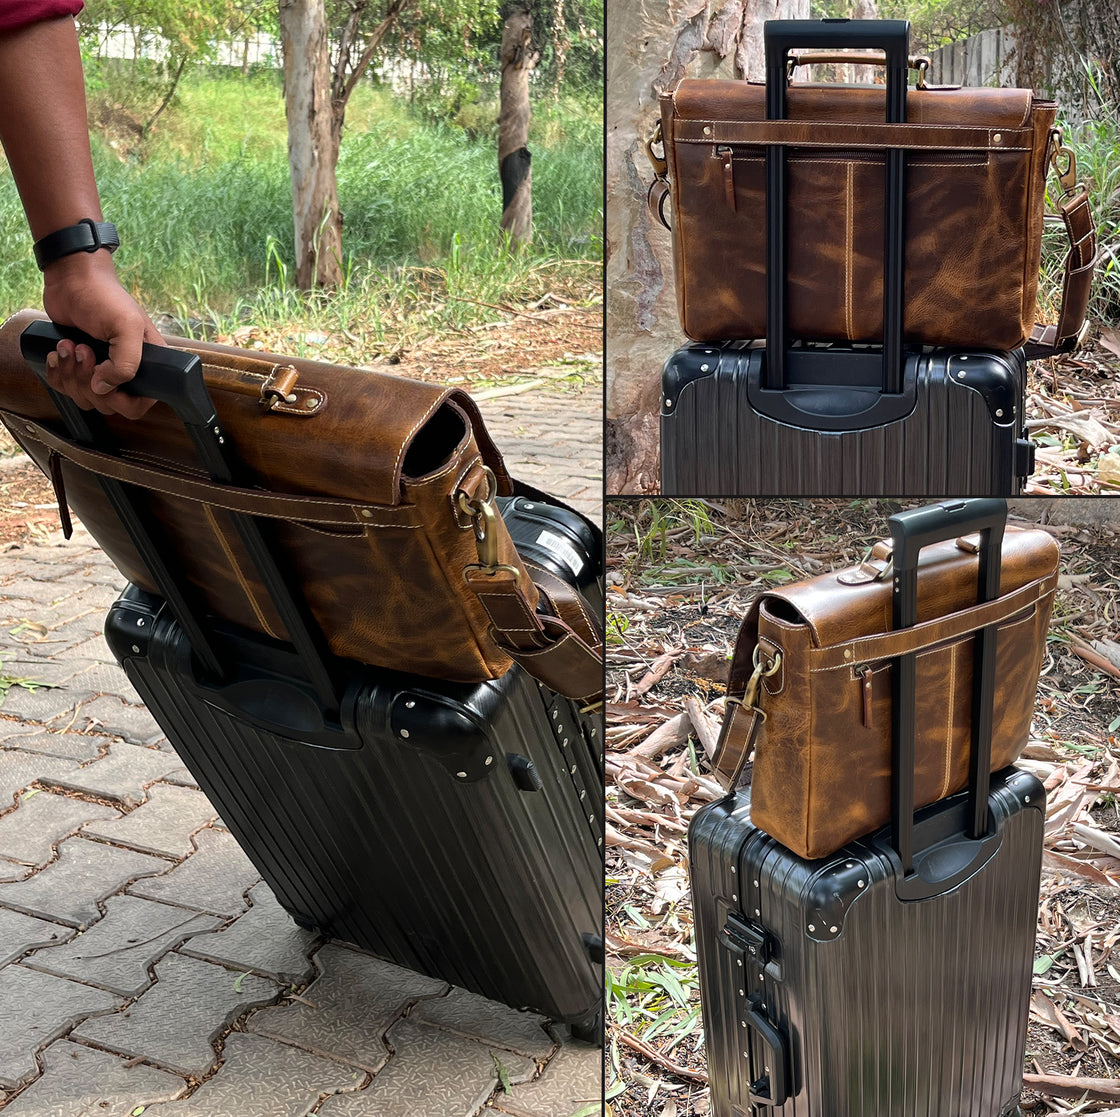 Predator 16" Leather Briefcase Laptop Messenger Bag (Antique Brown)6